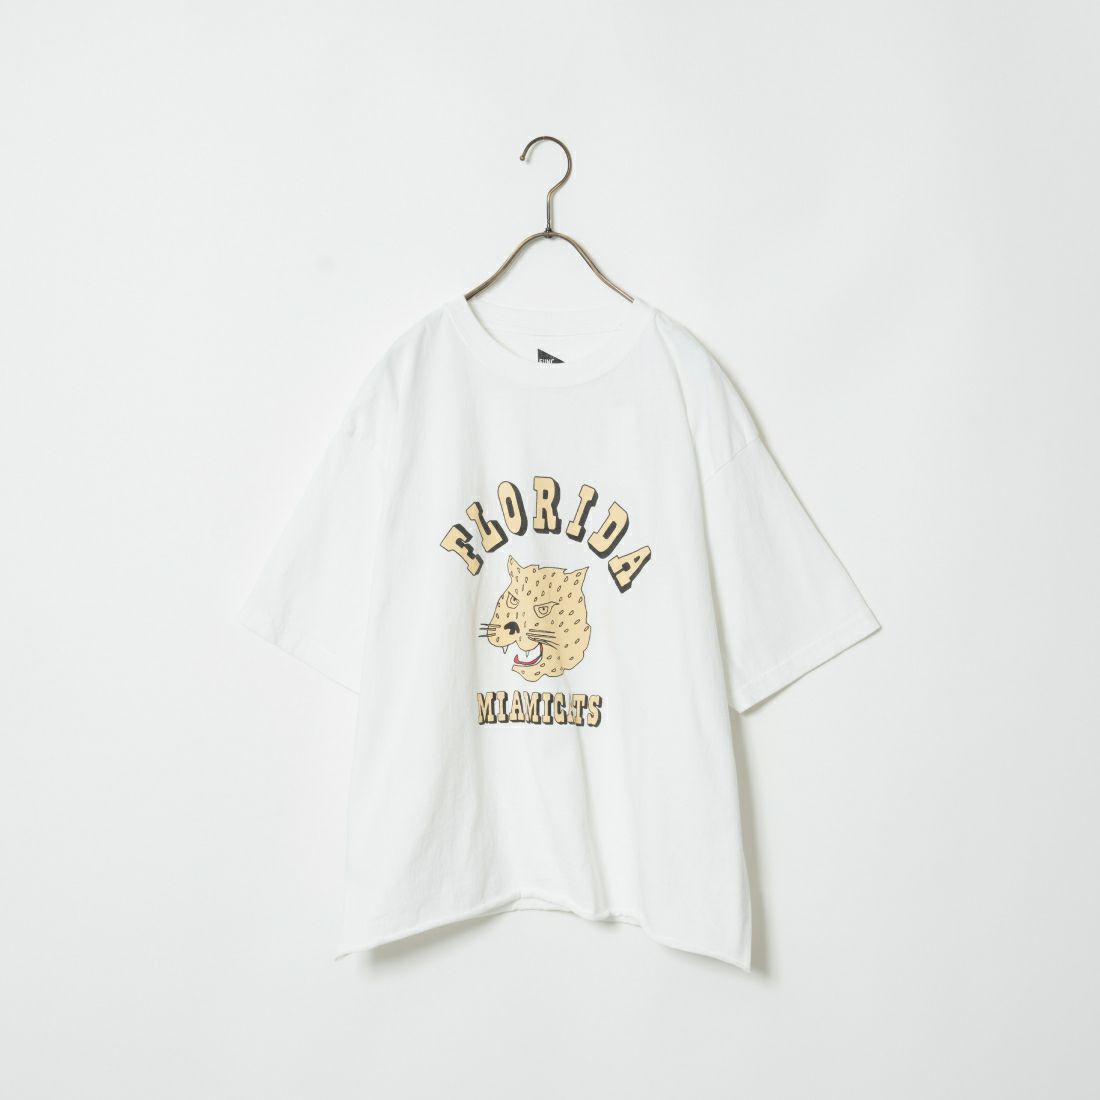 FUNG [ファング] FLORIDA カットオフプリントTシャツ [FLORIDA] WHITE